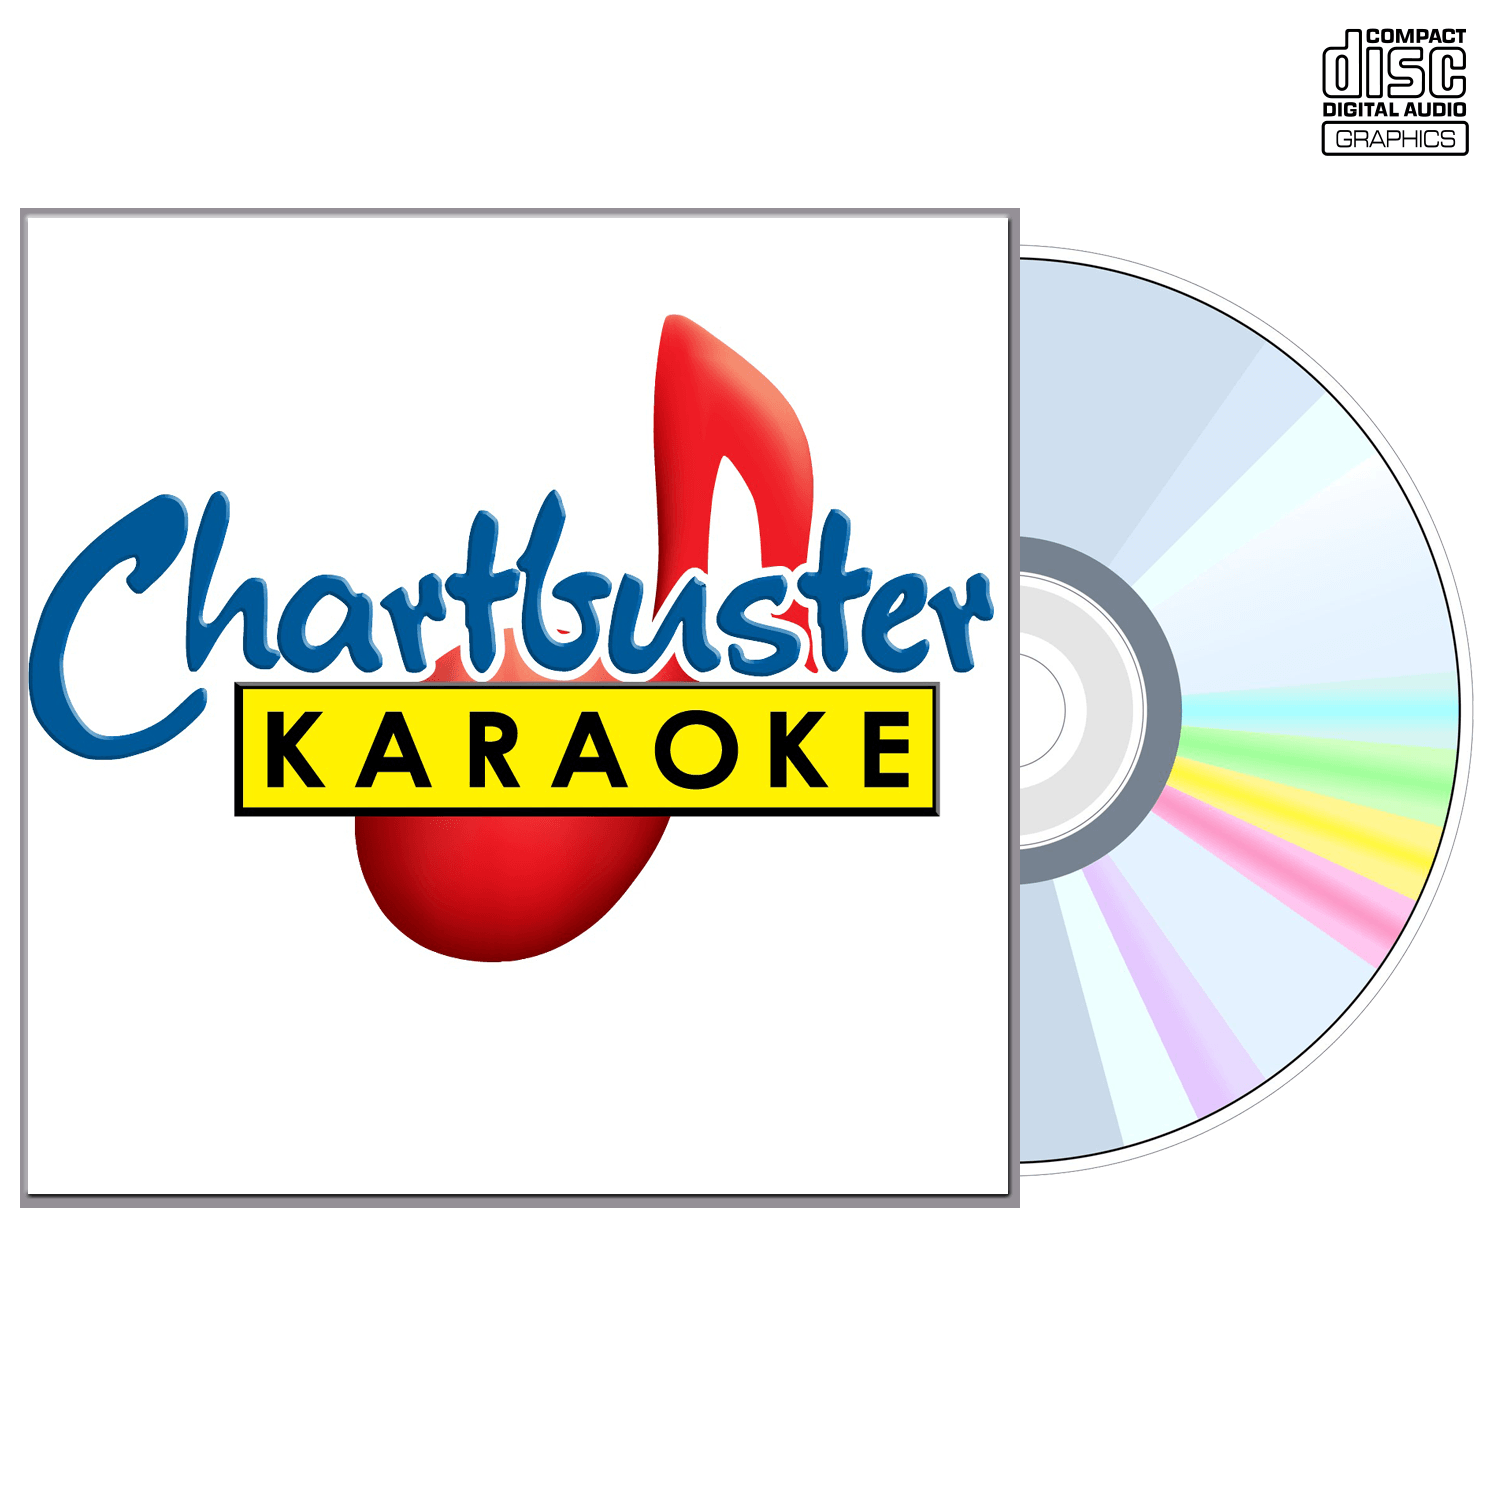 Ultimate 90's Collection Vol 13 - CD+G - Chartbuster Karaoke - Karaoke Home Entertainment